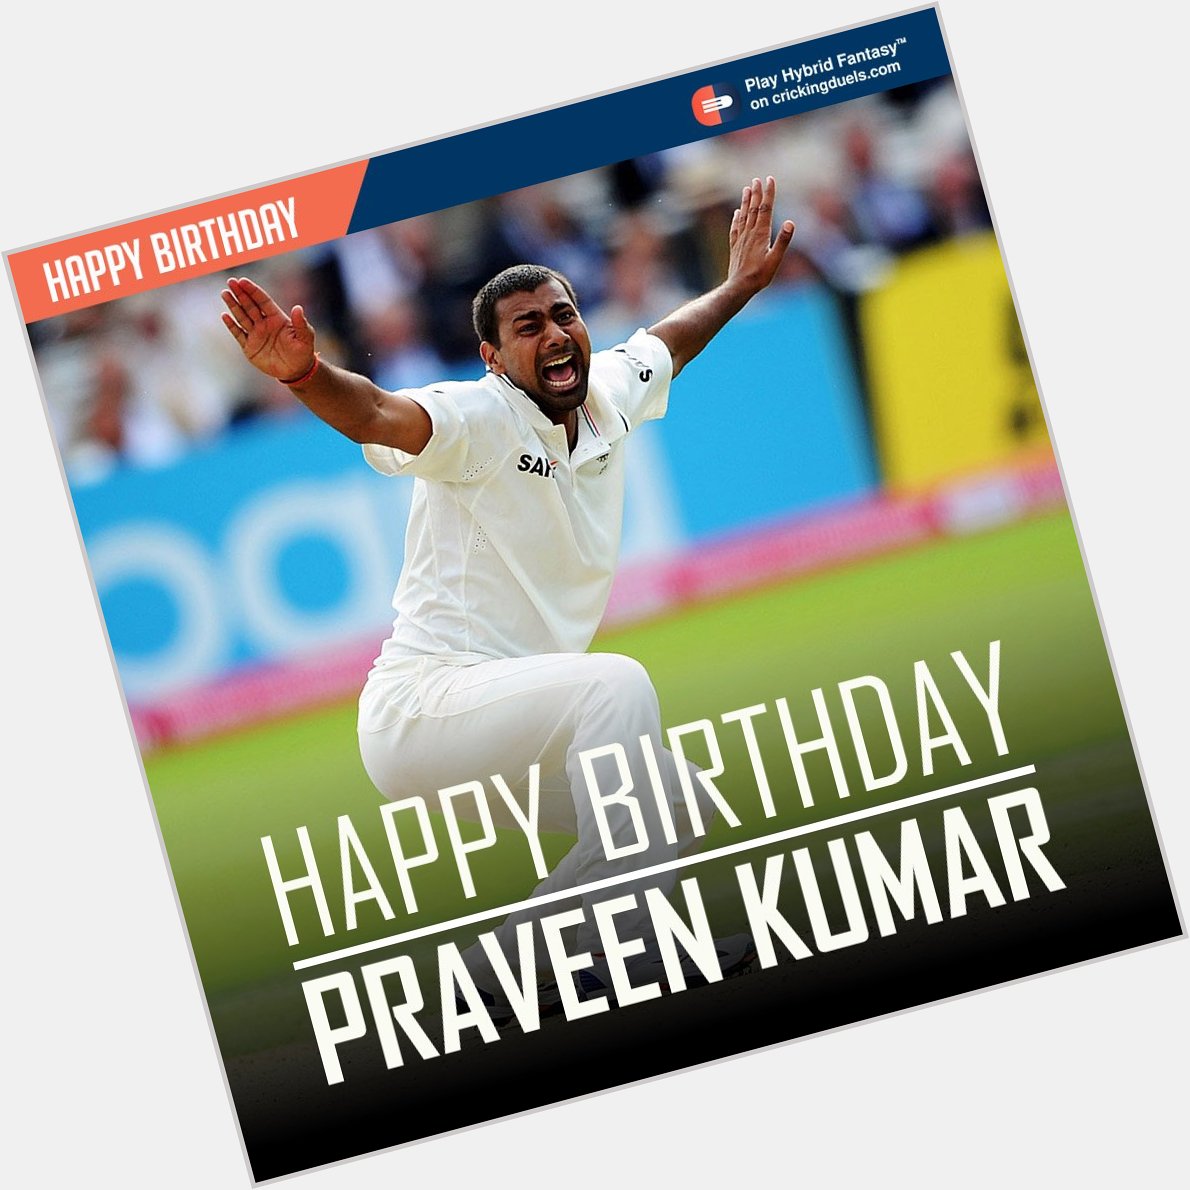 Happy Birthday, Praveen Kumar. The Indian cricketer turns 31 today. 